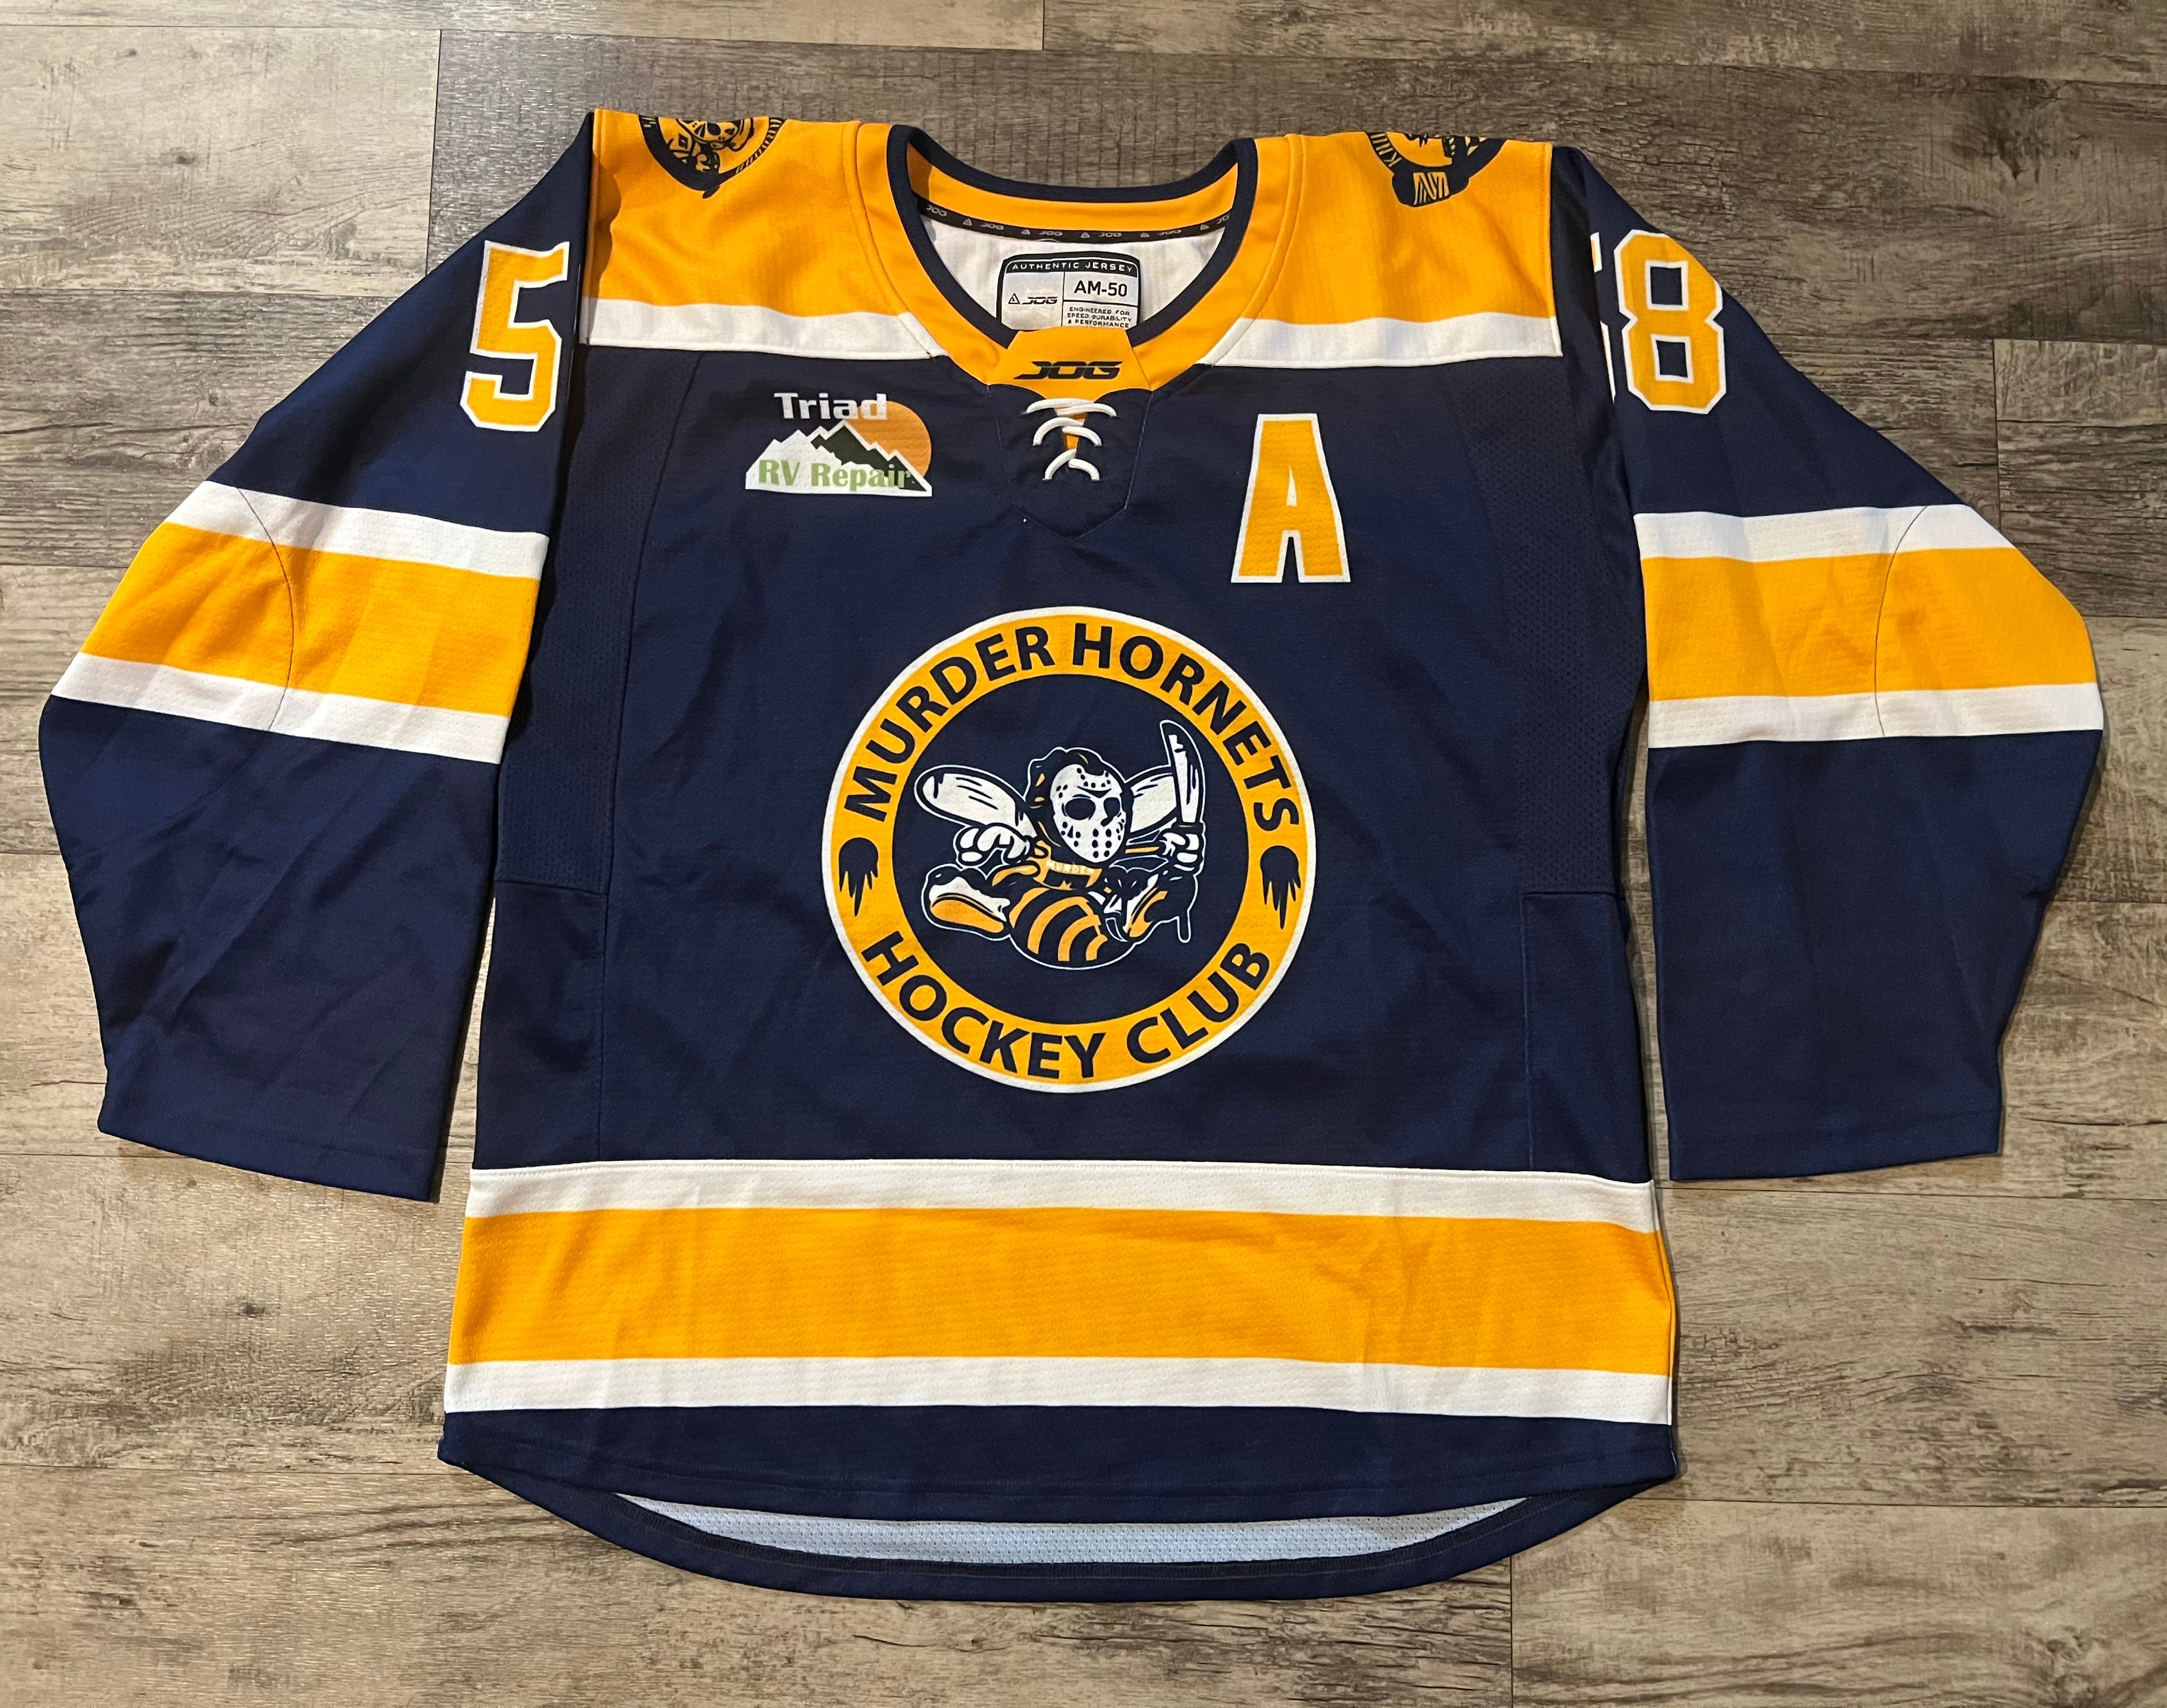 Source beer league hockey jerseys, minor league hockey jerseys